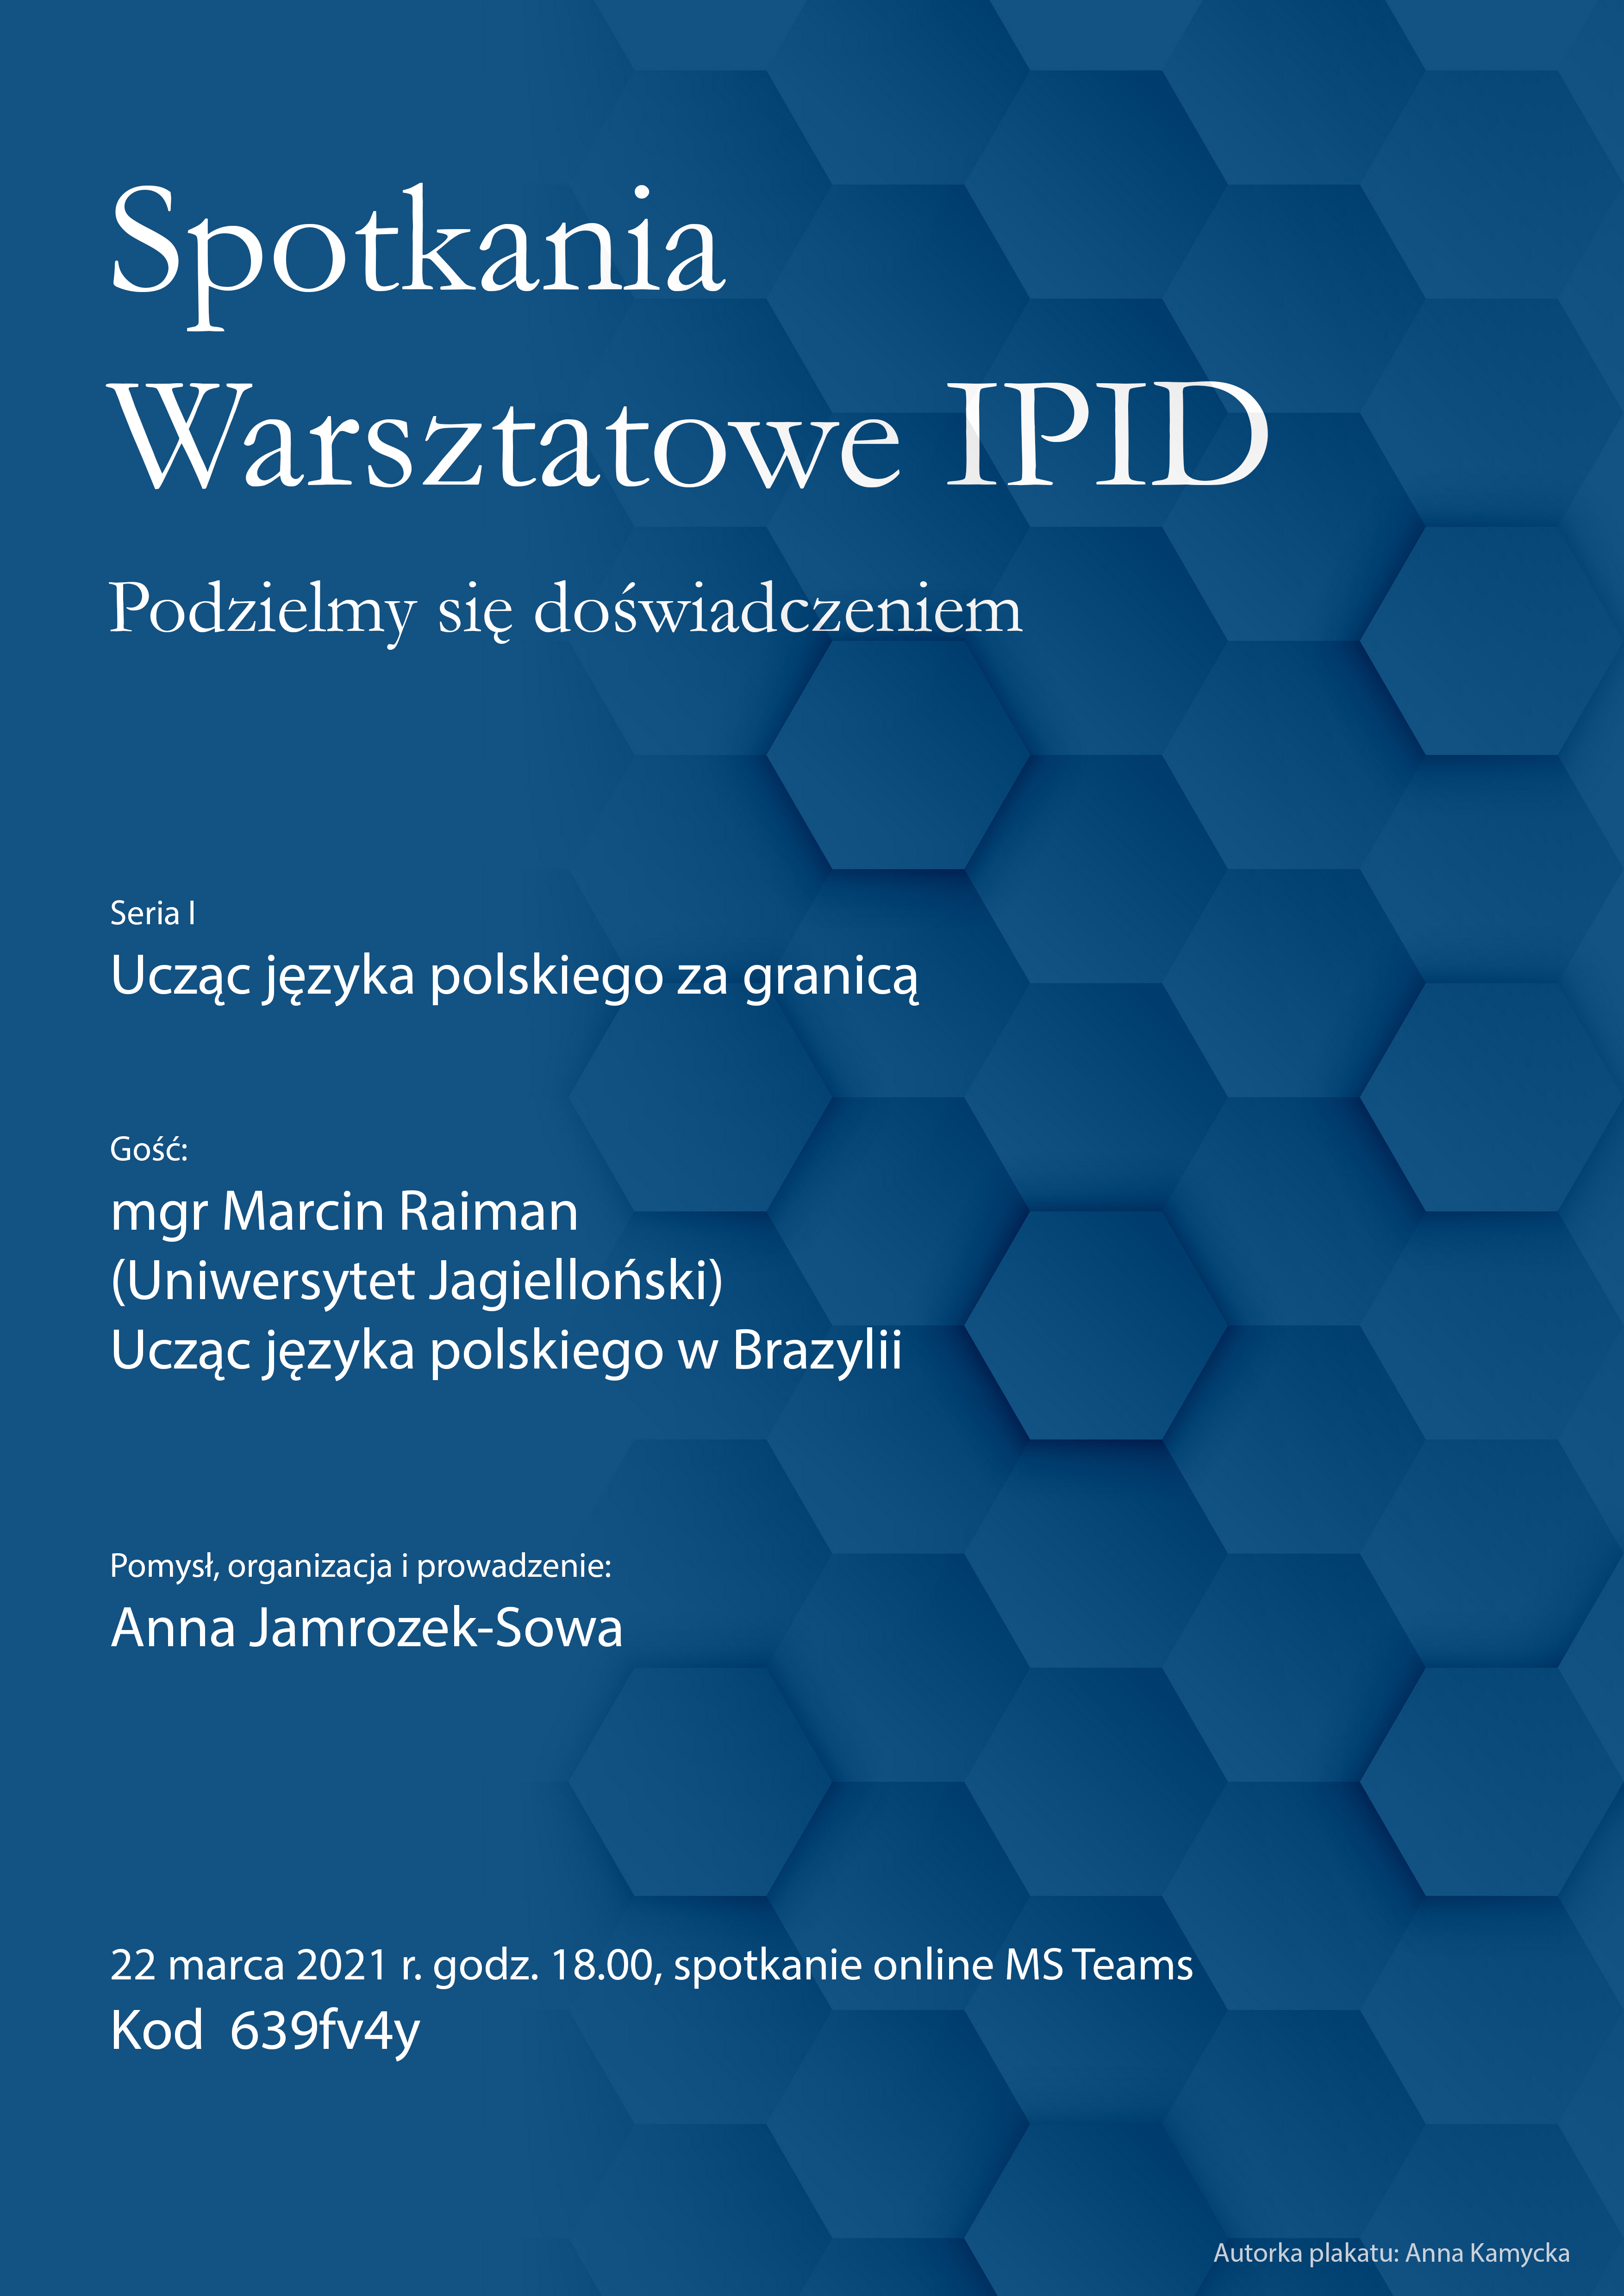 Plakat Spotkania Warsztatowe IPID 22 marca 2021.jpg [1.86 MB]